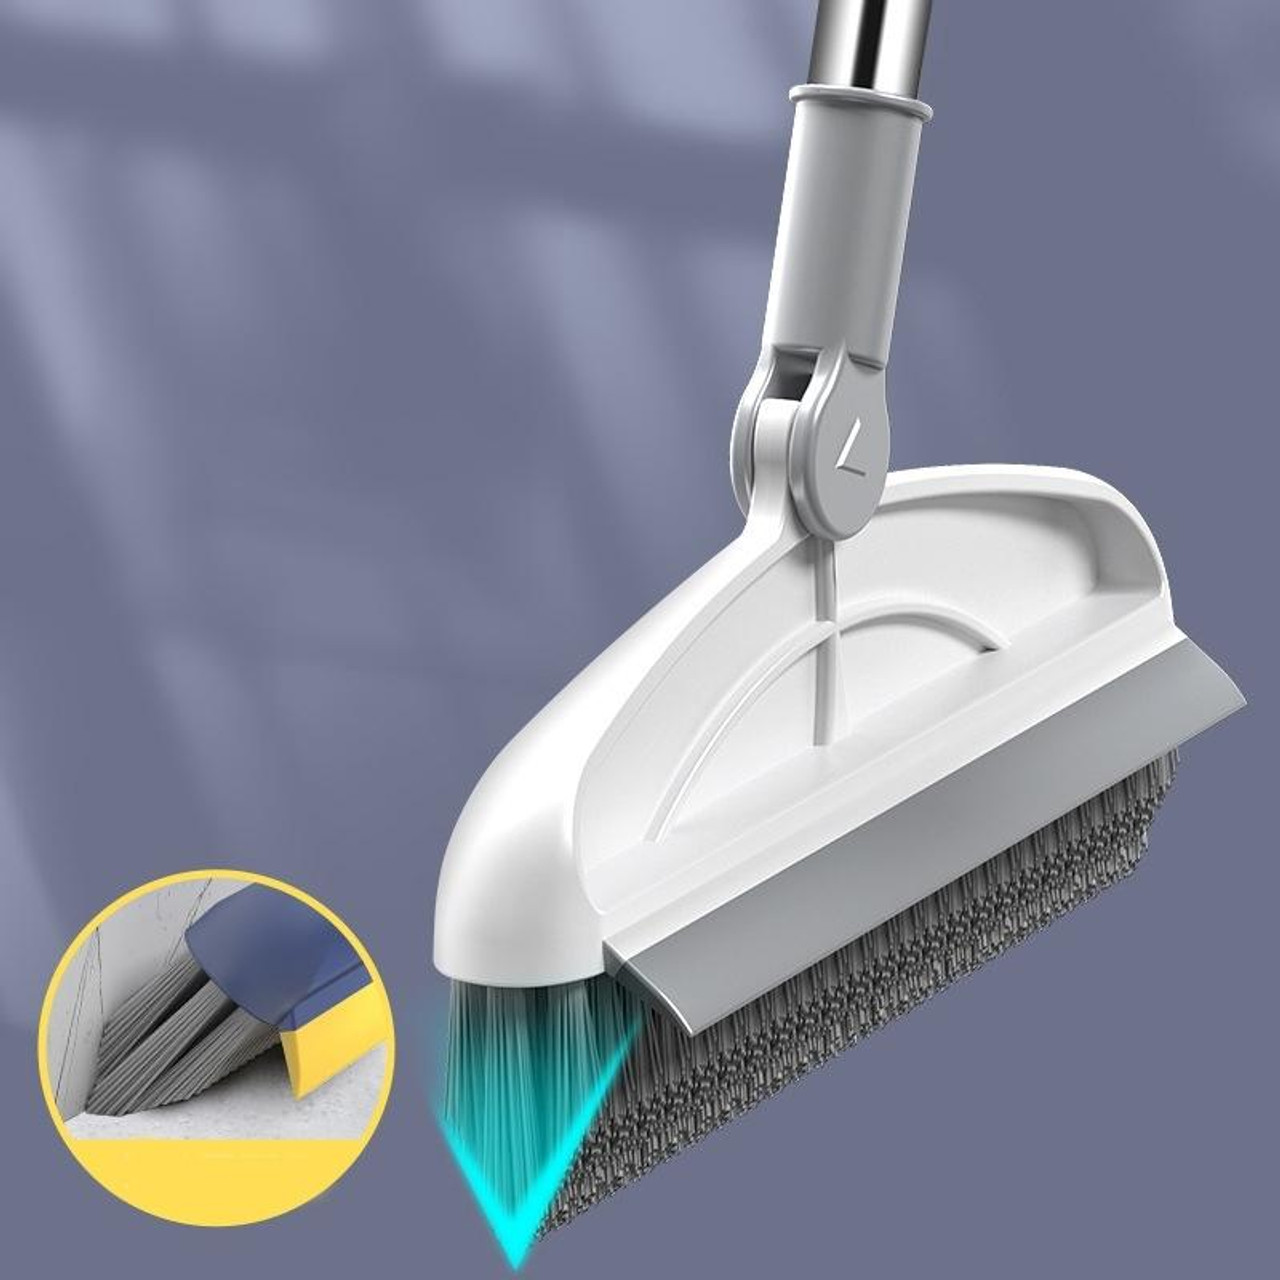 4pcs Hard-Bristled Crevice Cleaning Scrub Brush Household Brush